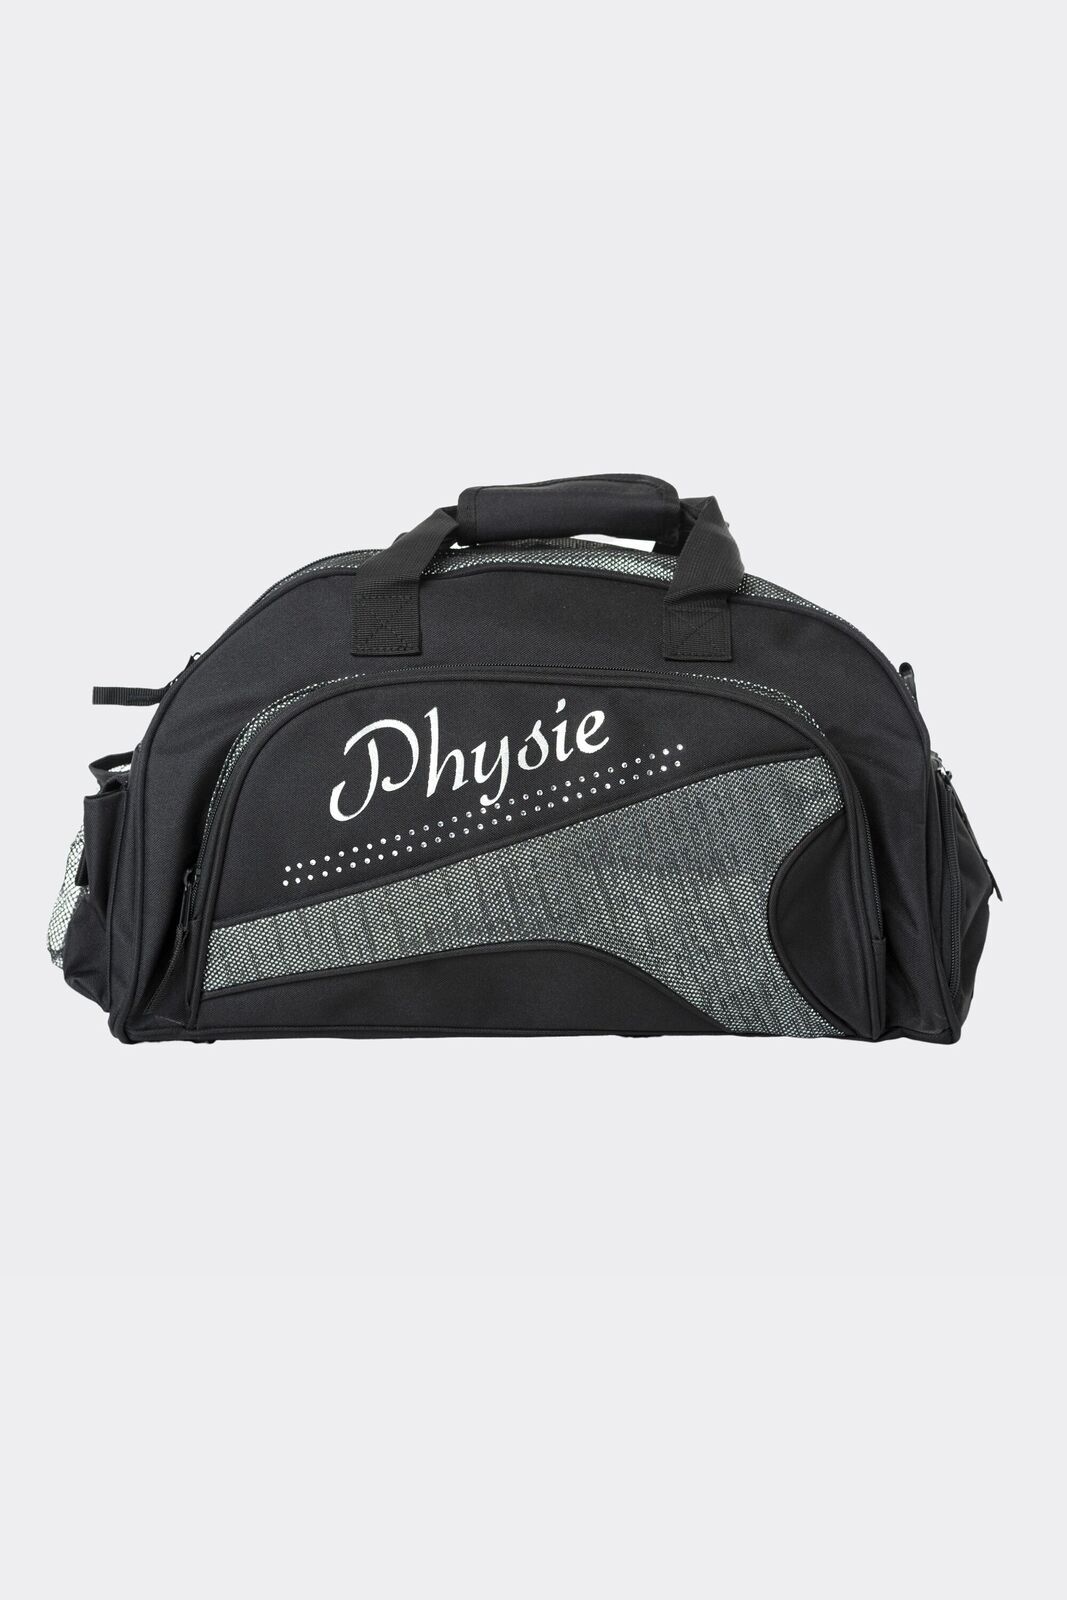 Studio 7 Junior Duffel Bag Physie